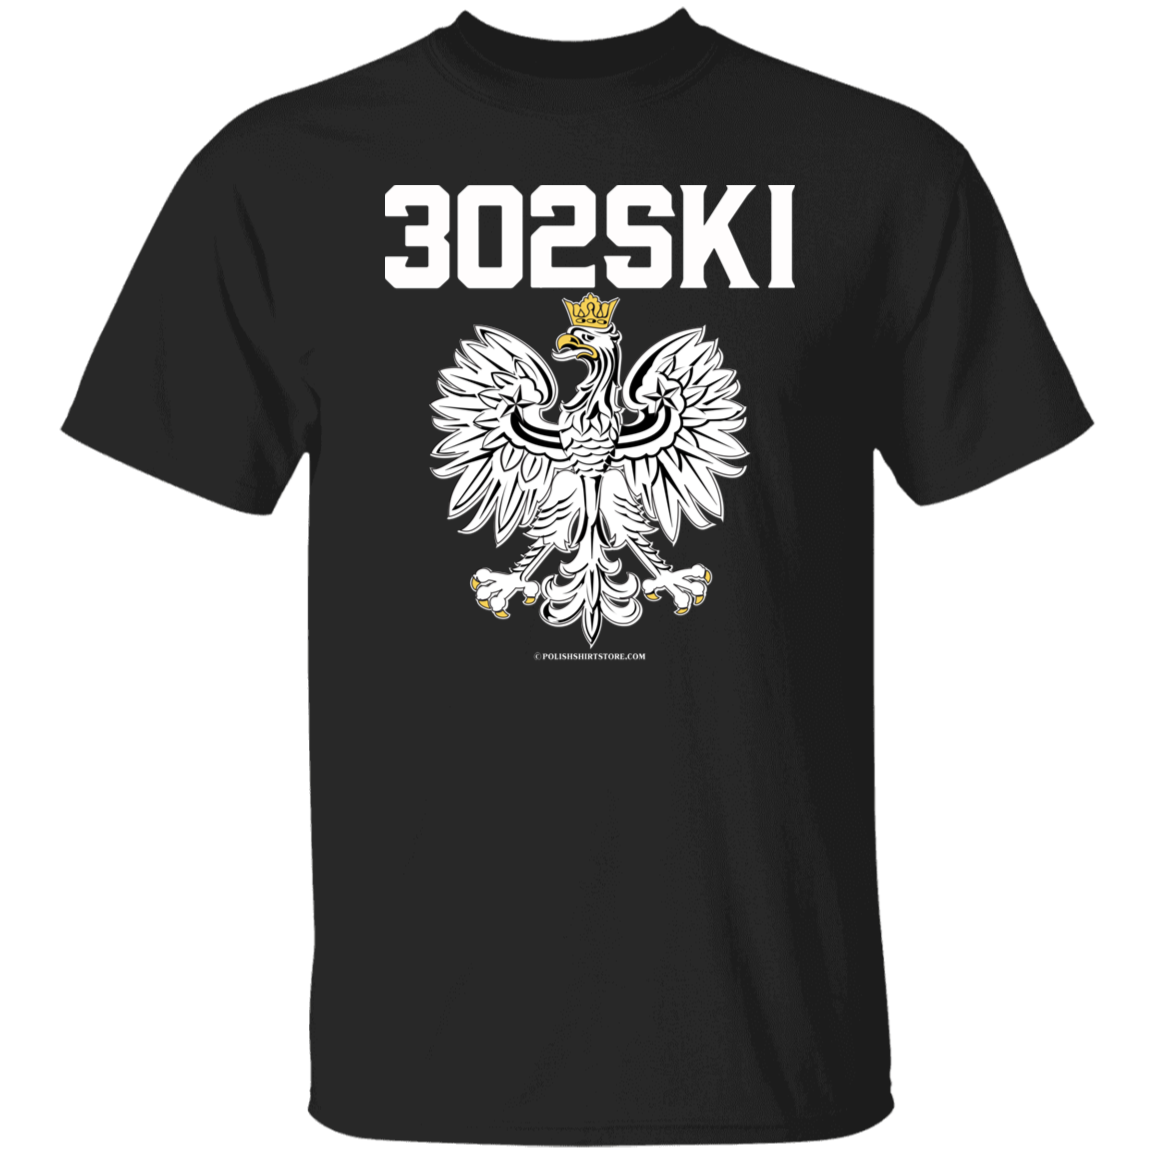 302SKI Apparel CustomCat G500 5.3 oz. T-Shirt Black S